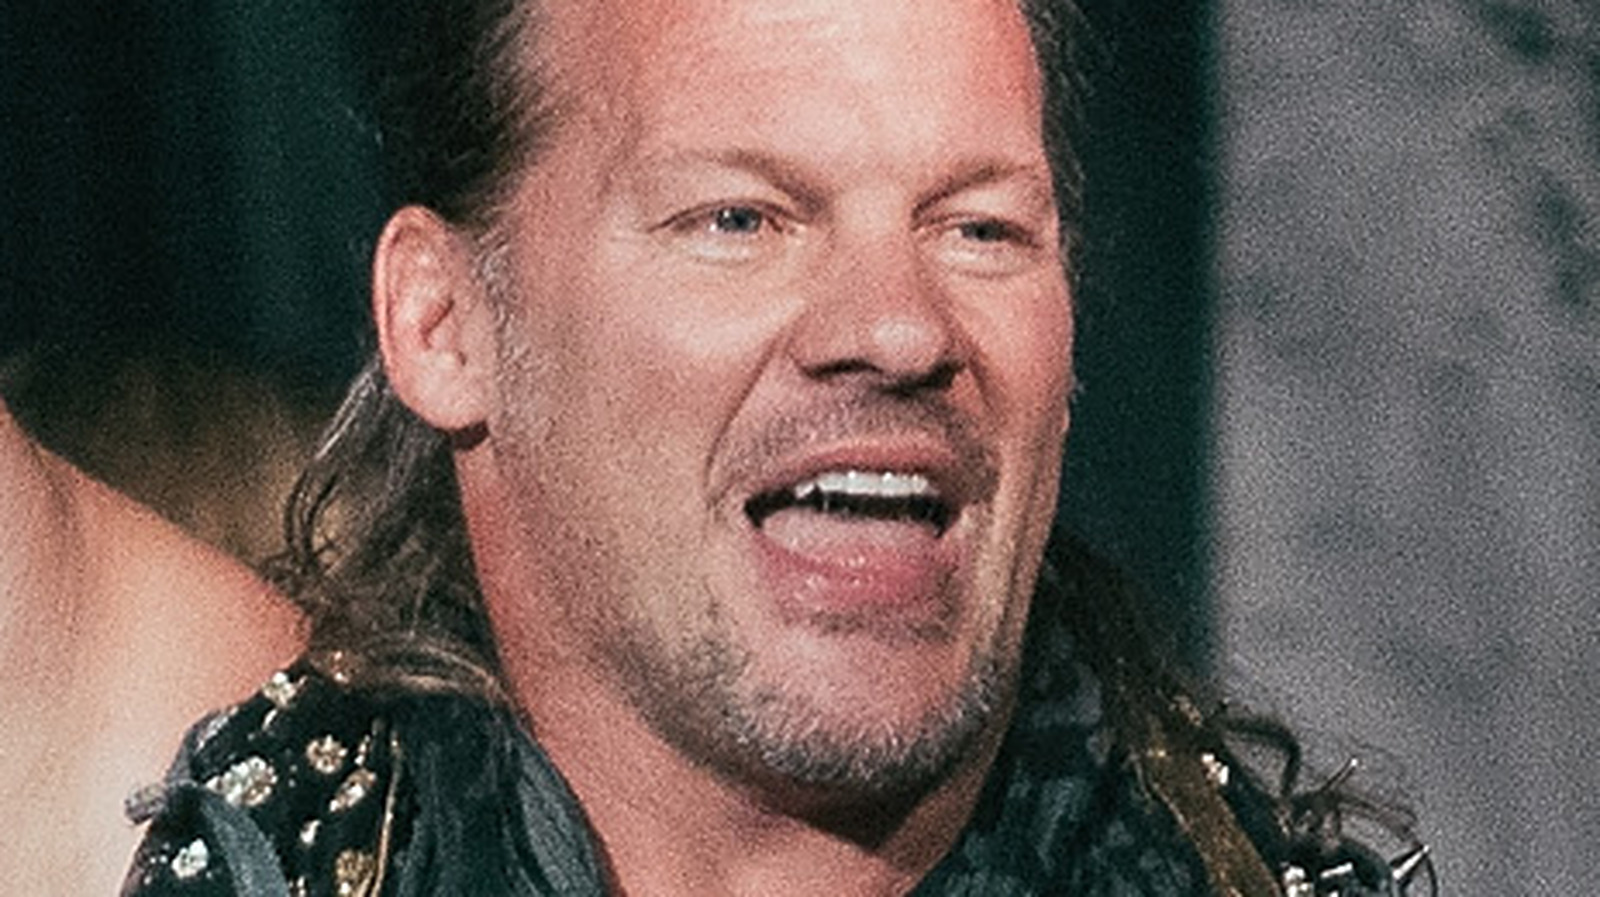 Former Wwe Star Reveals Advice He Got From Chris Jericho